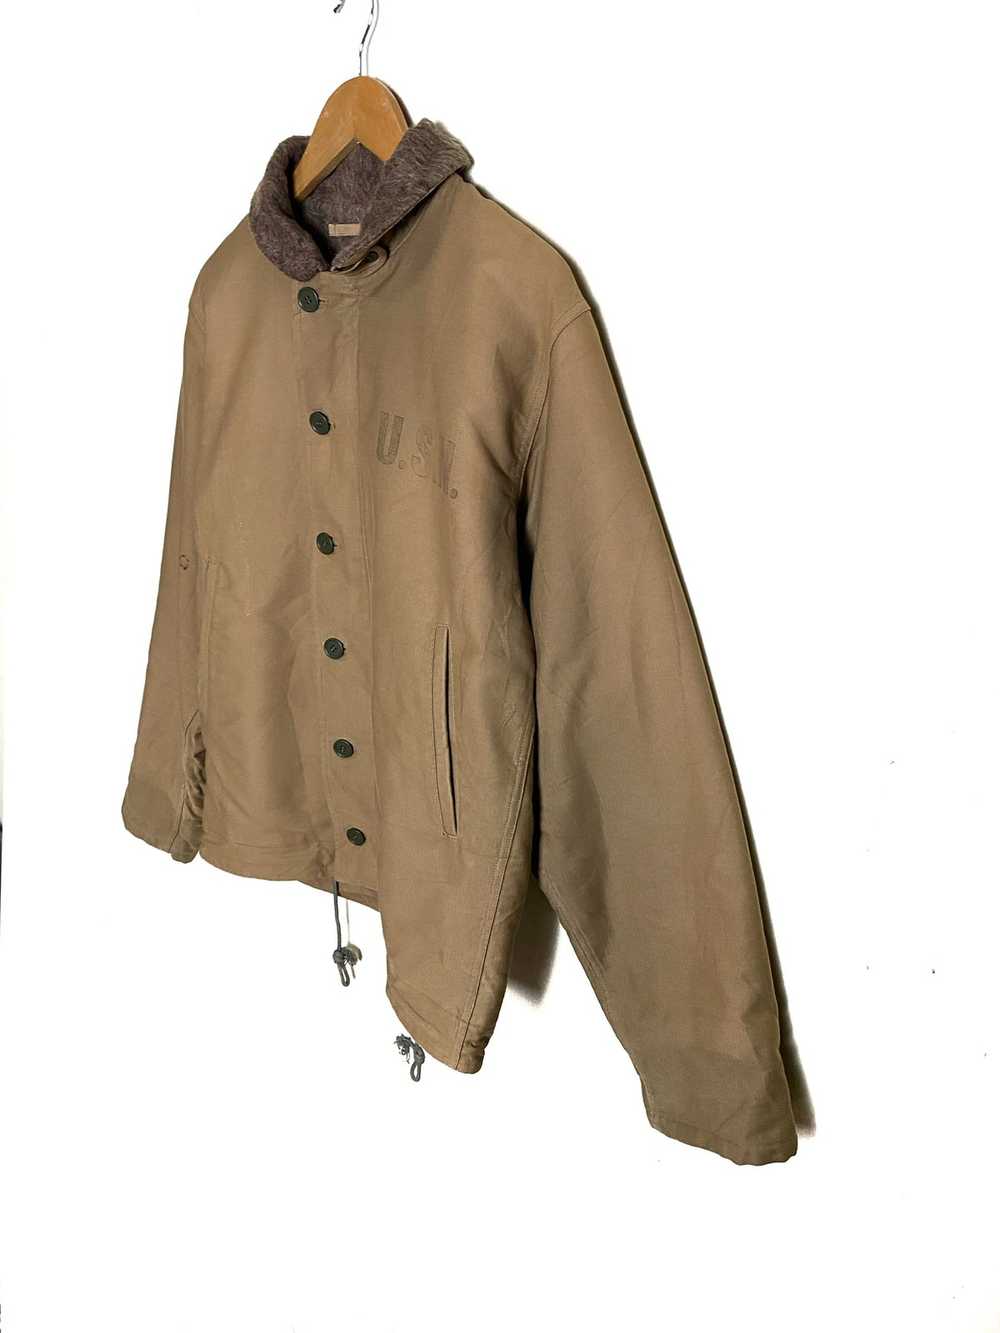 Buzz Rickson's - Vintage N-1 USN Deck Jacket - image 6